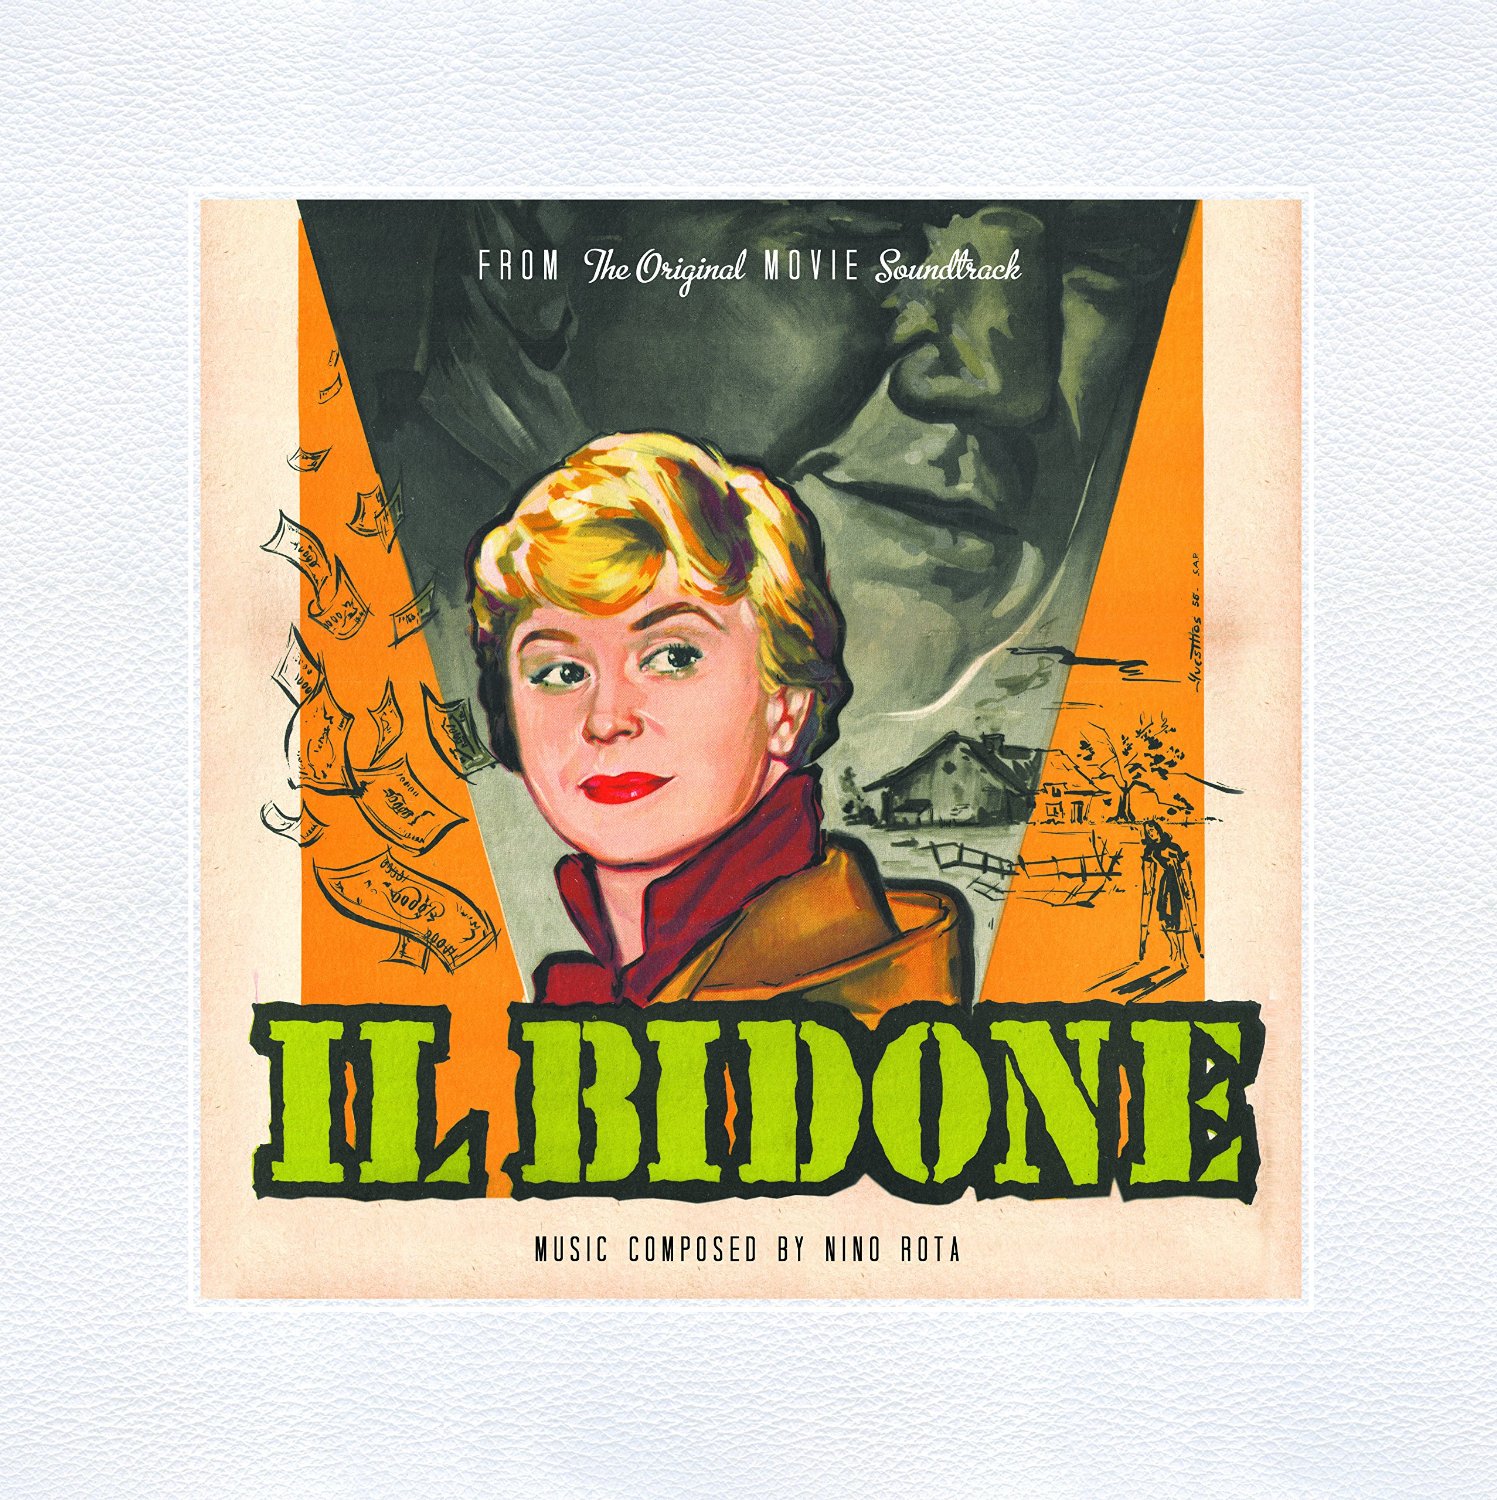 ost 08 16 catalogFILM Vinyl IlBidone